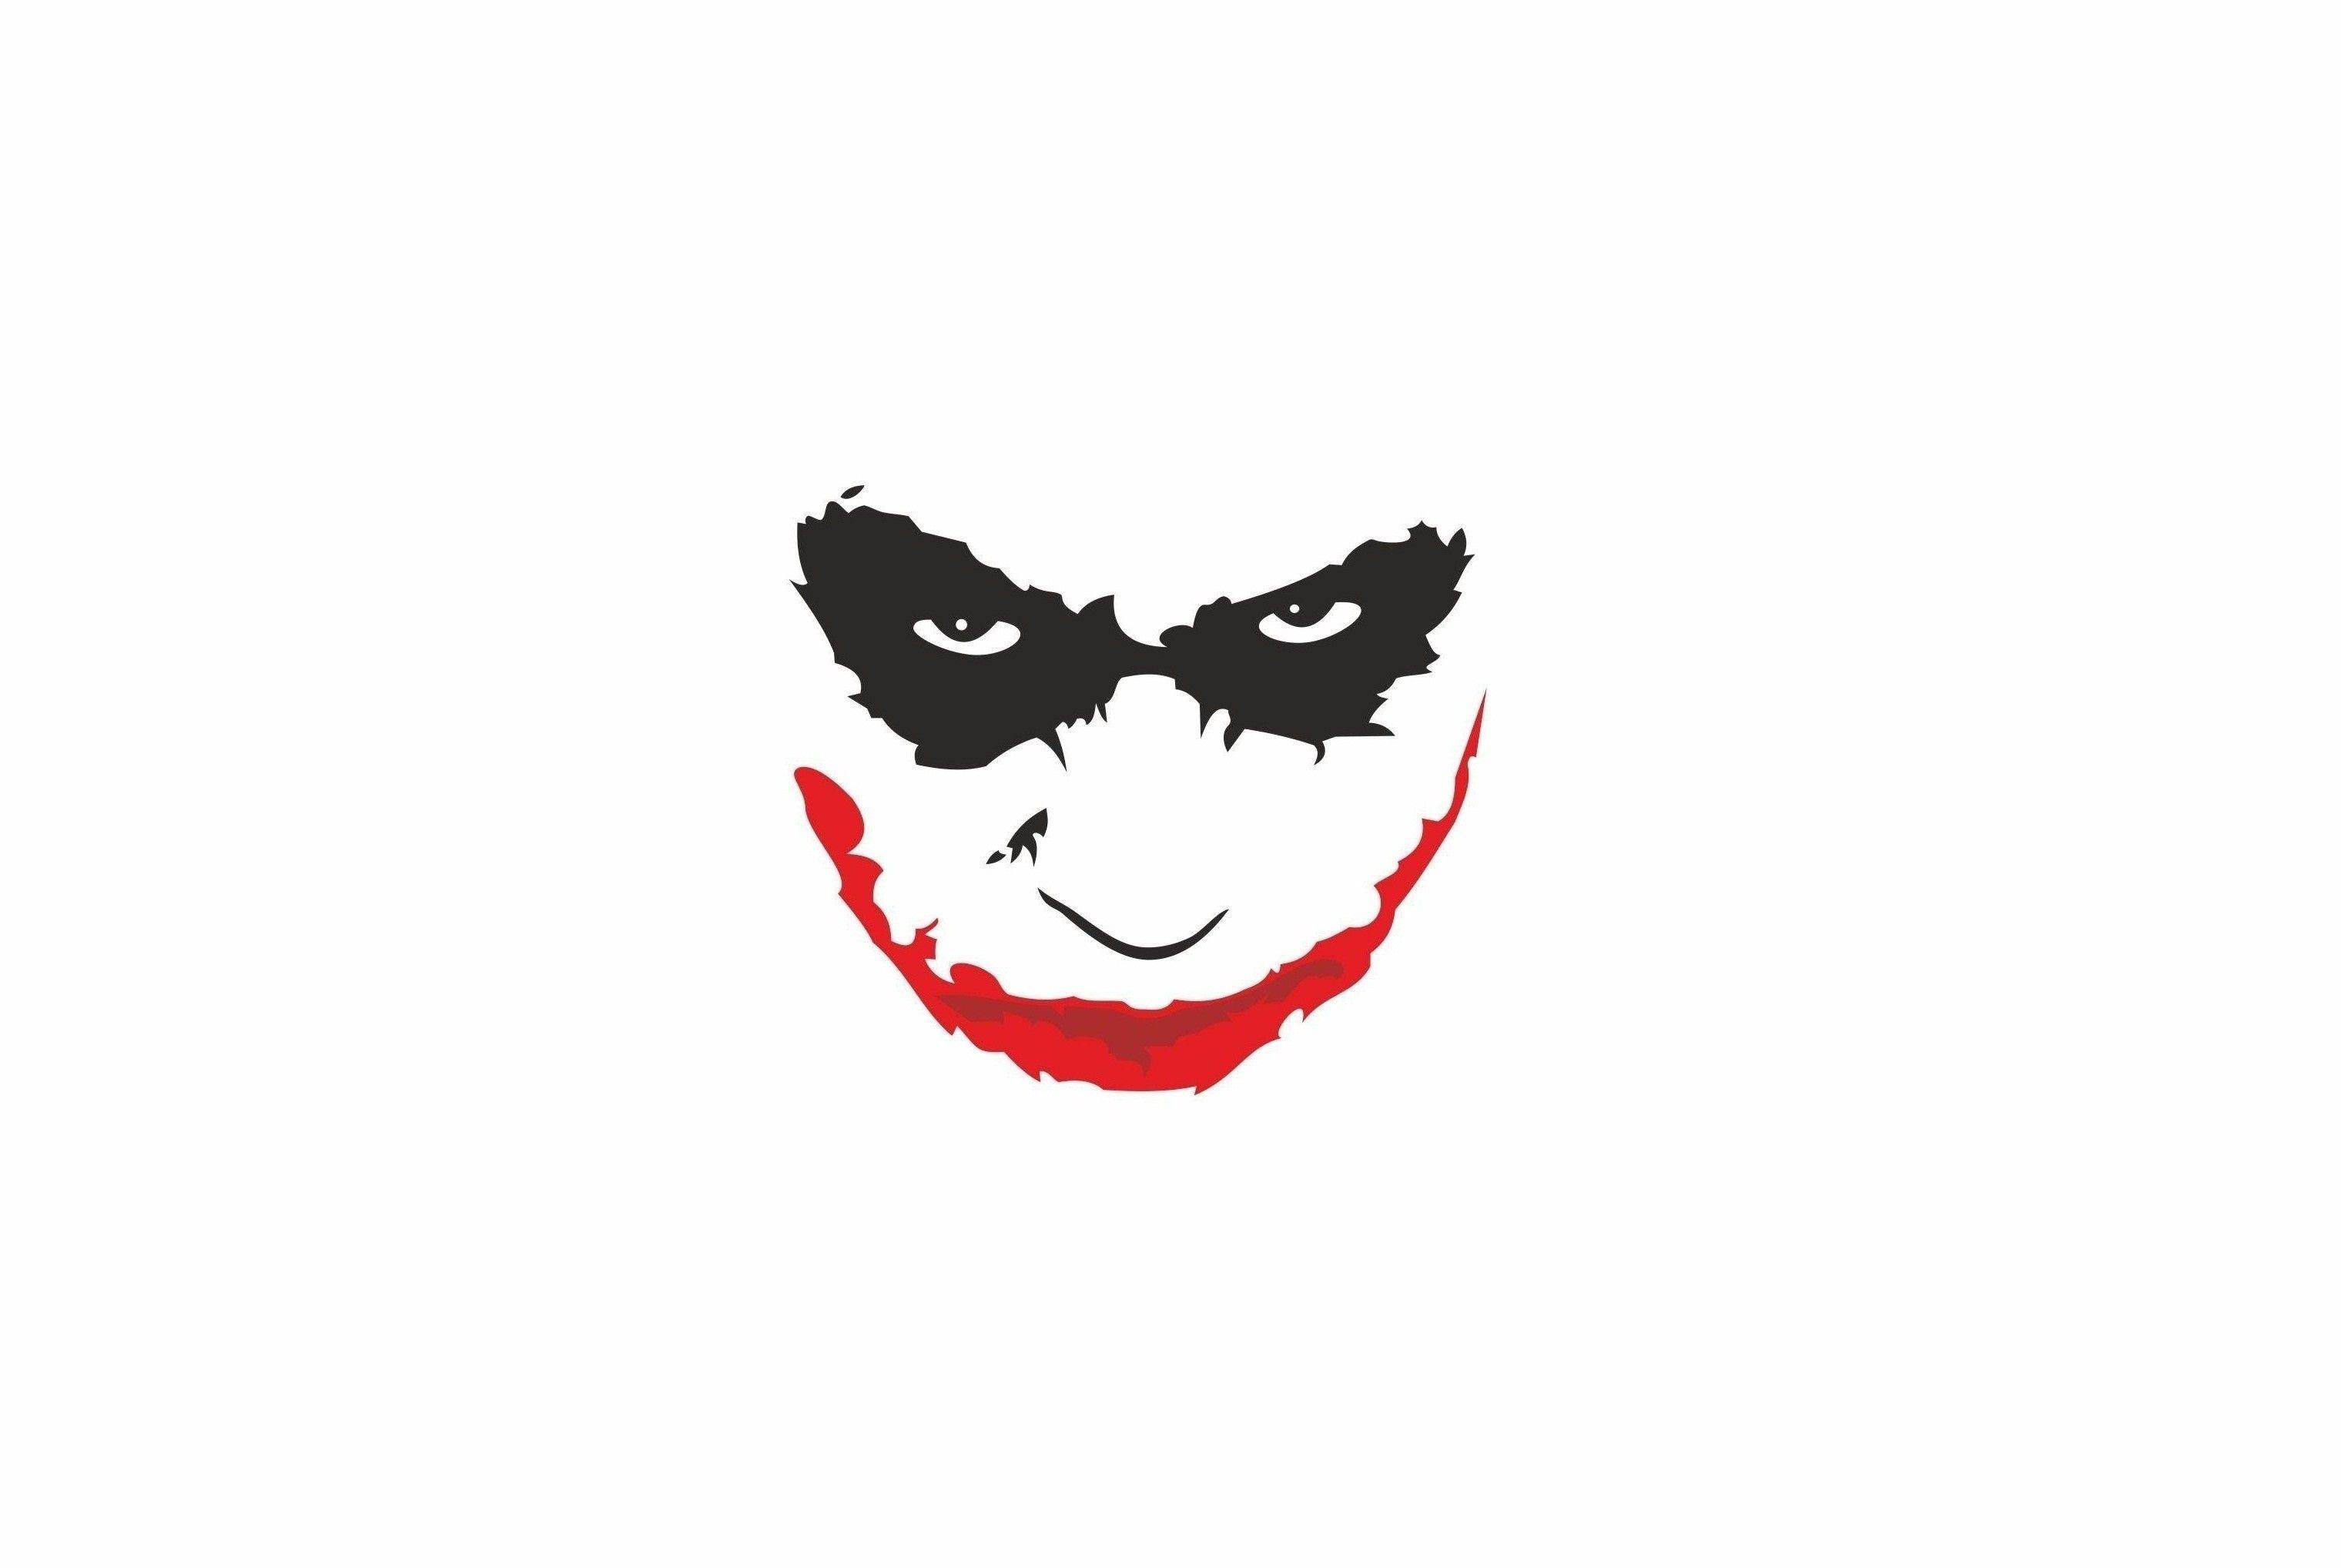 Joker HD Wallpaper 1080p